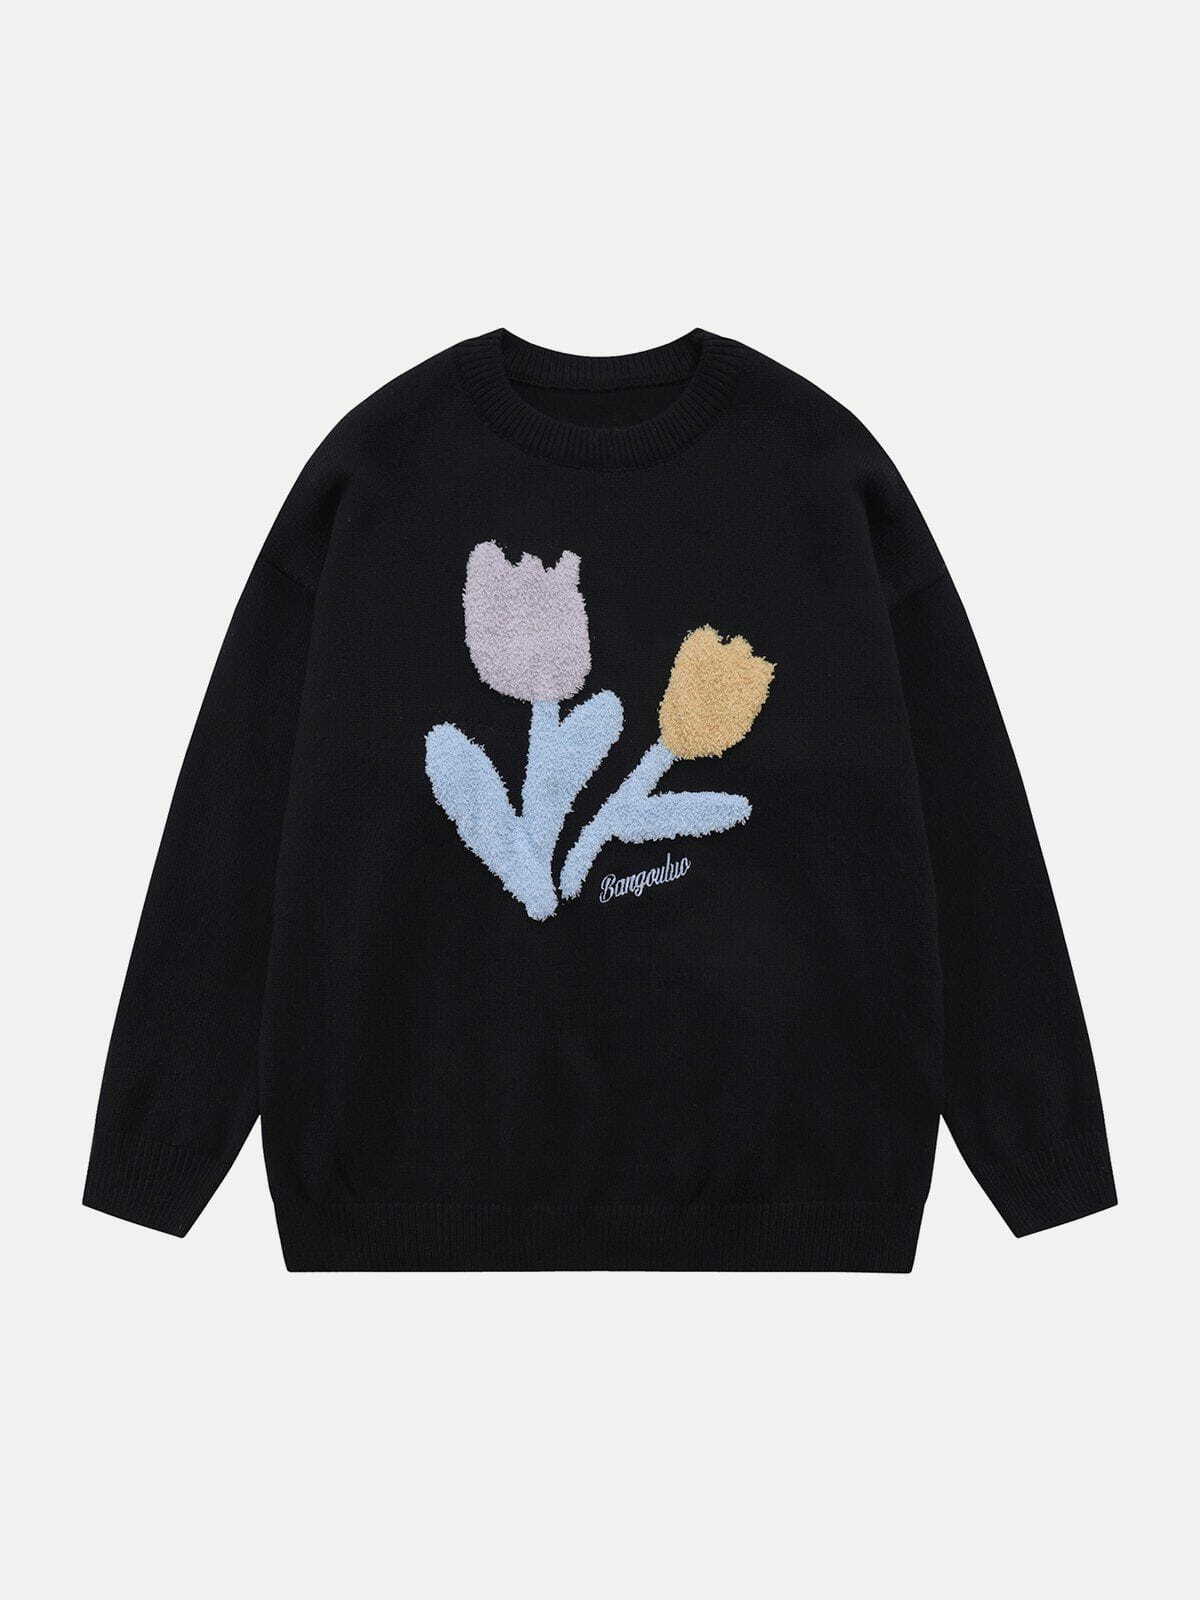 plush floral sweater vibrant & cozy streetwear 6879